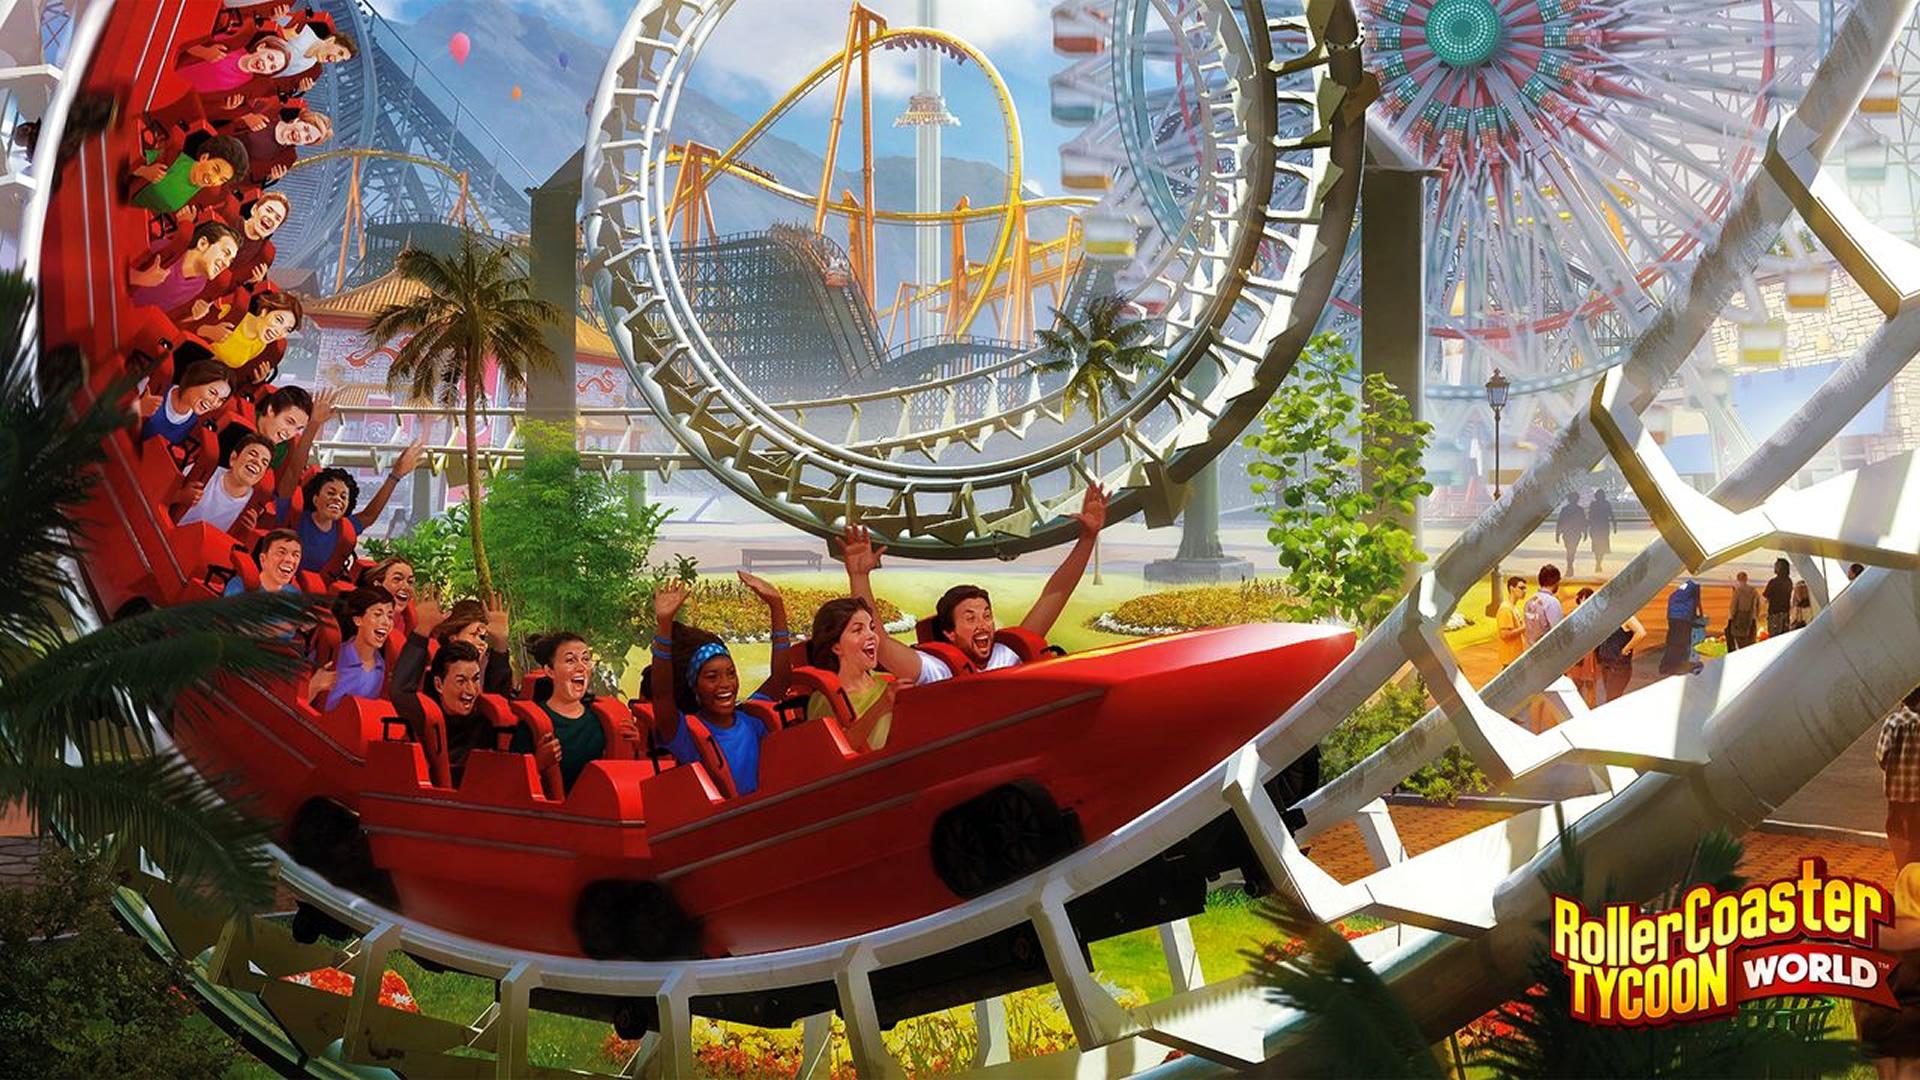 750 Roller Coaster Pictures HD  Download Free Images on Unsplash